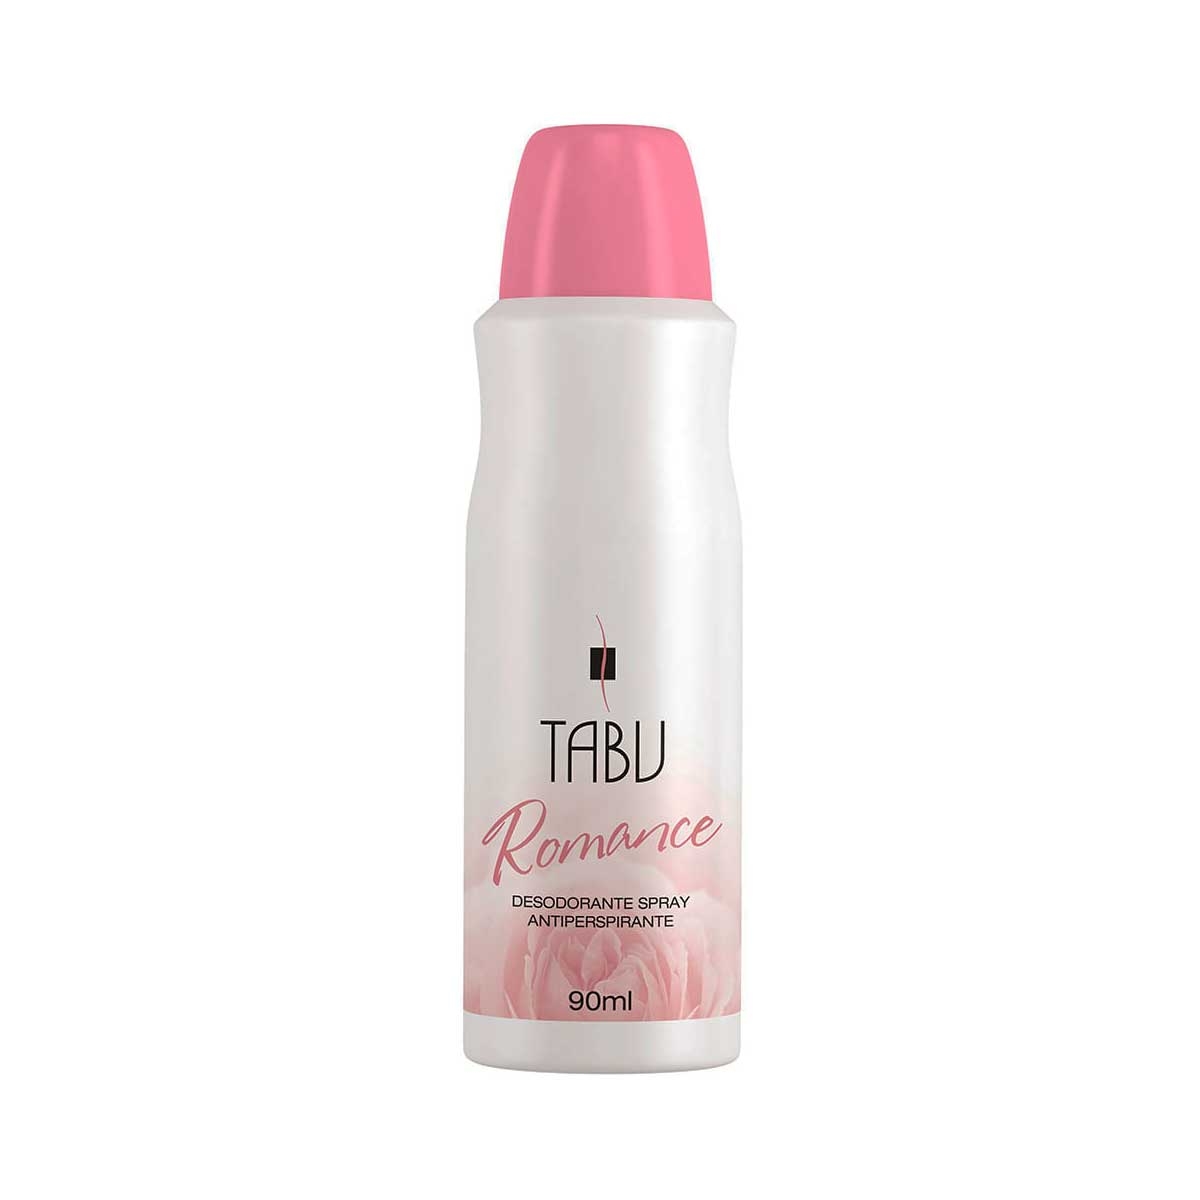 Desodorante Spray Tabu Romance Antitranspirante com 90ml 90ml